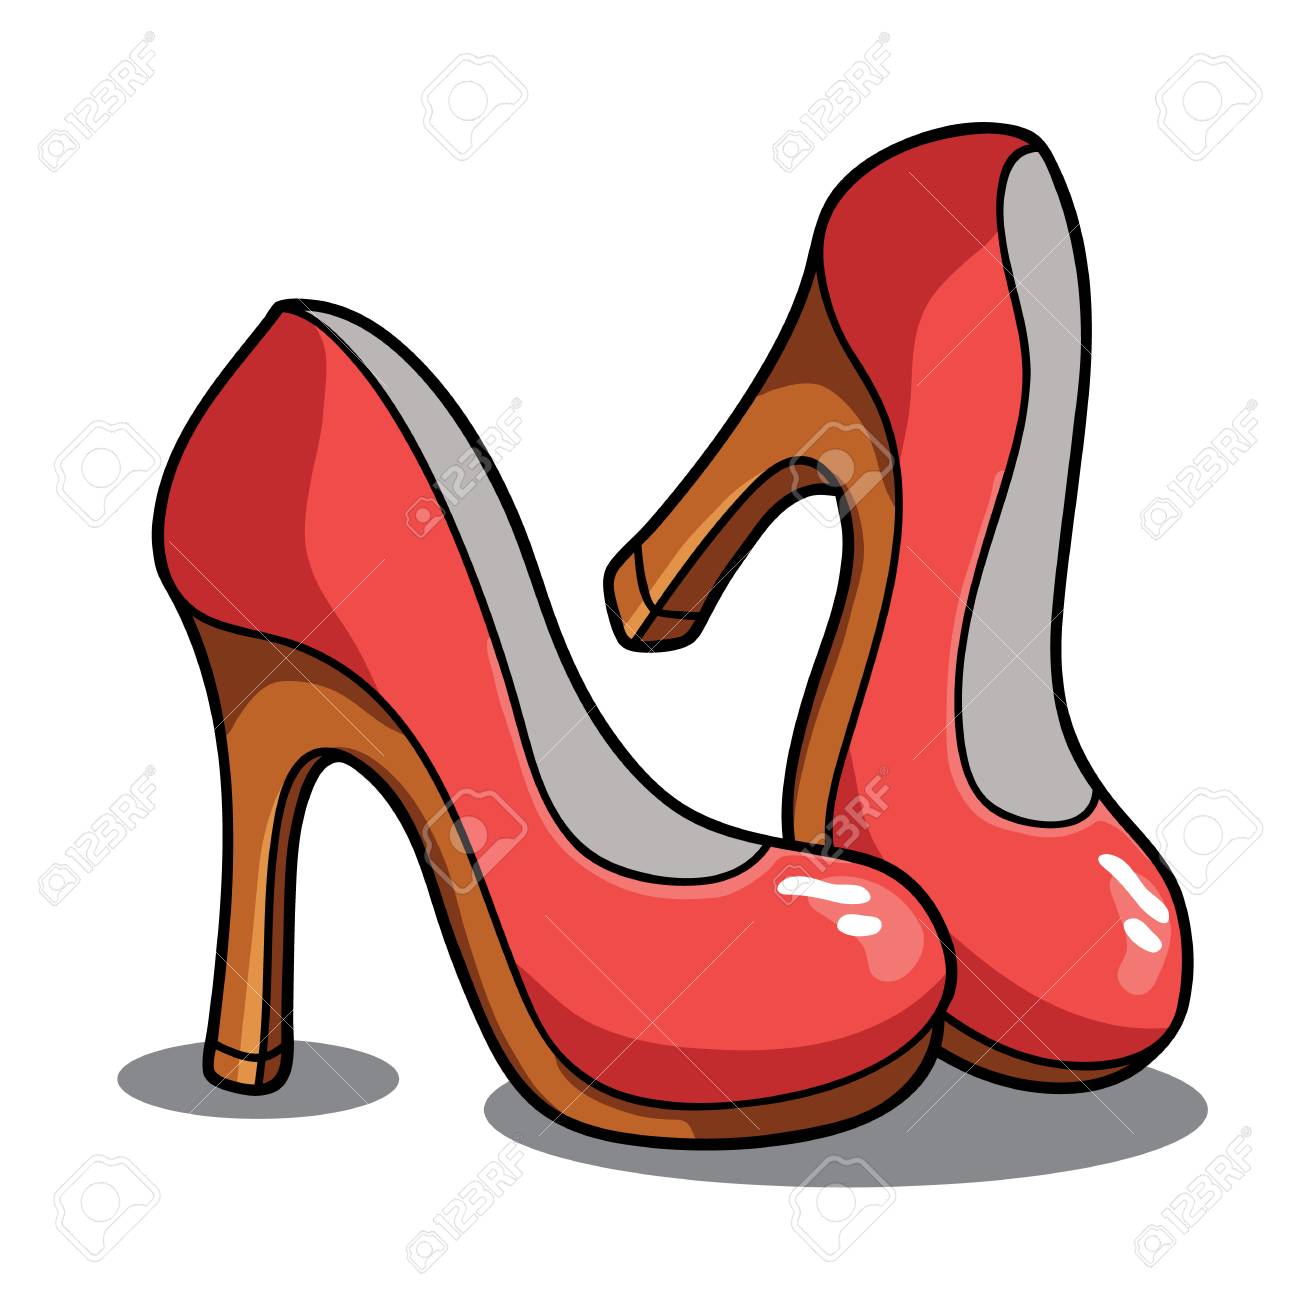 Vector illustration of cute cartoon high heel shoes for children...